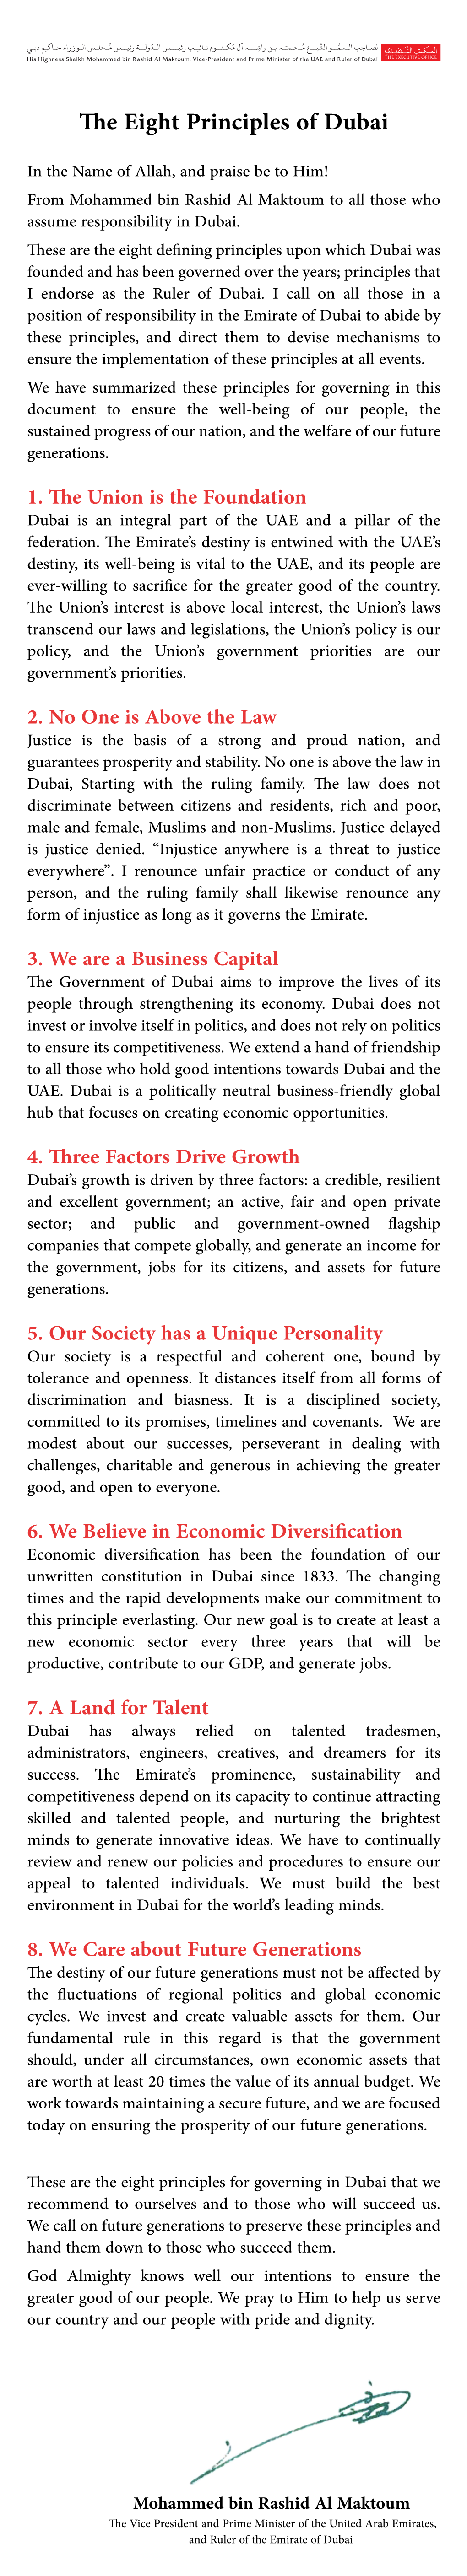 The Eight Principles of Dubai